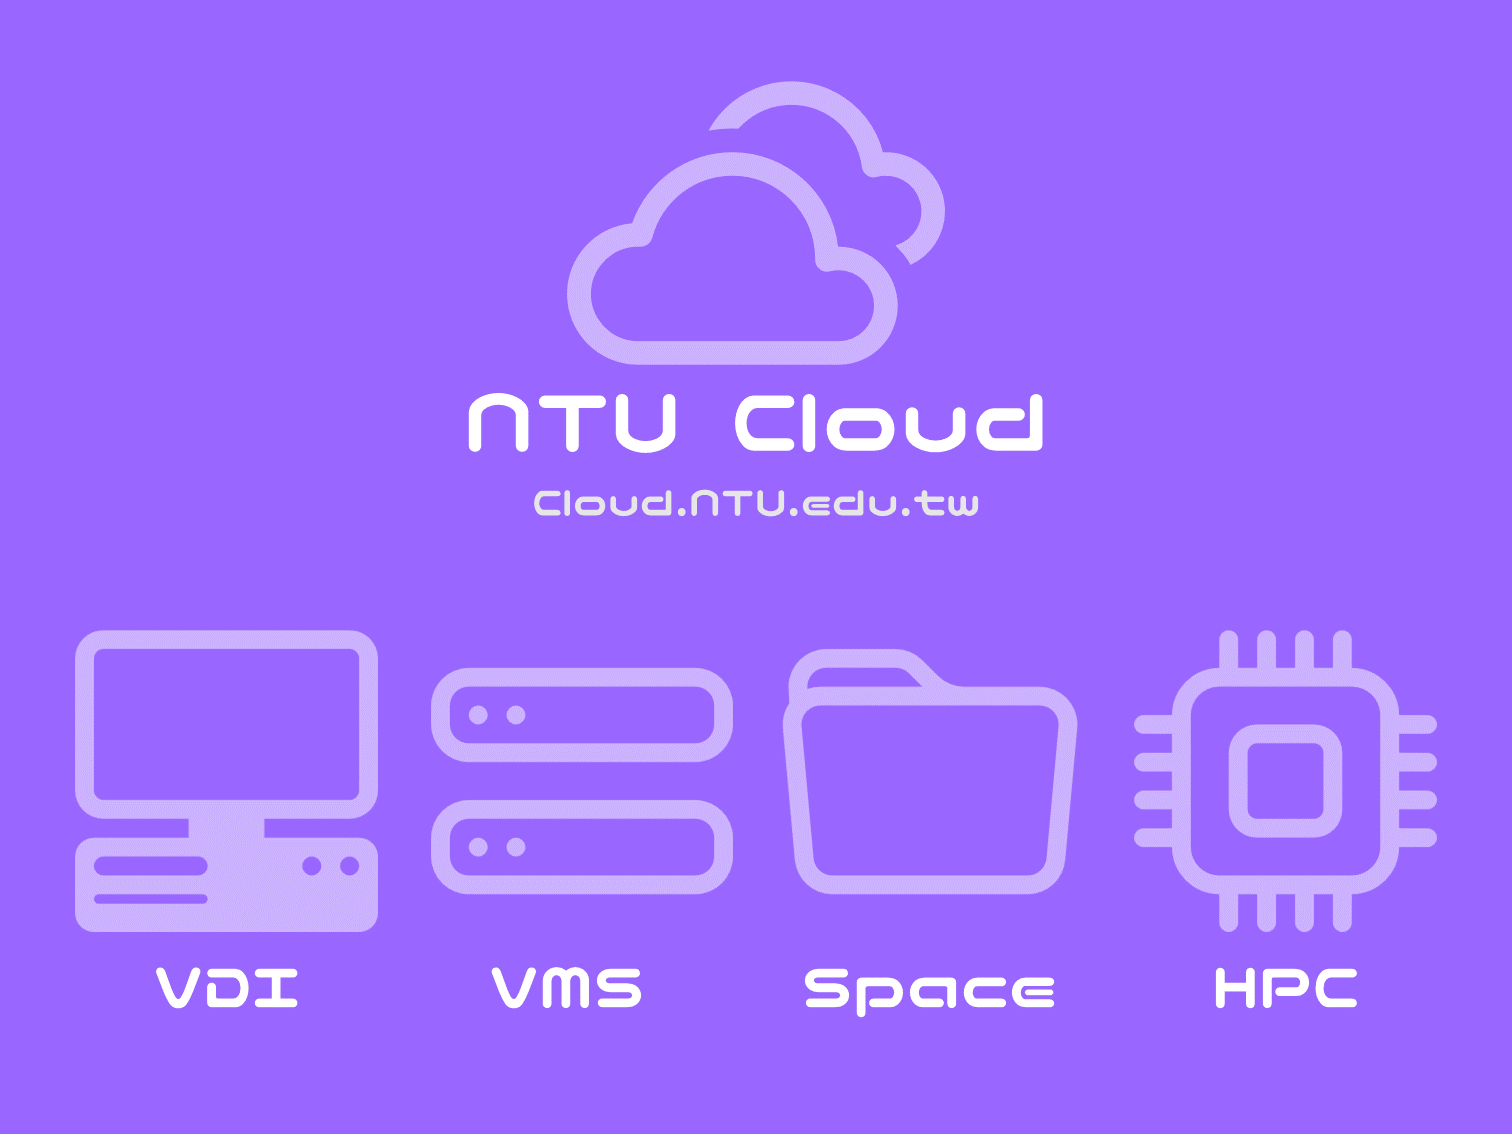 NTU Cloud Services